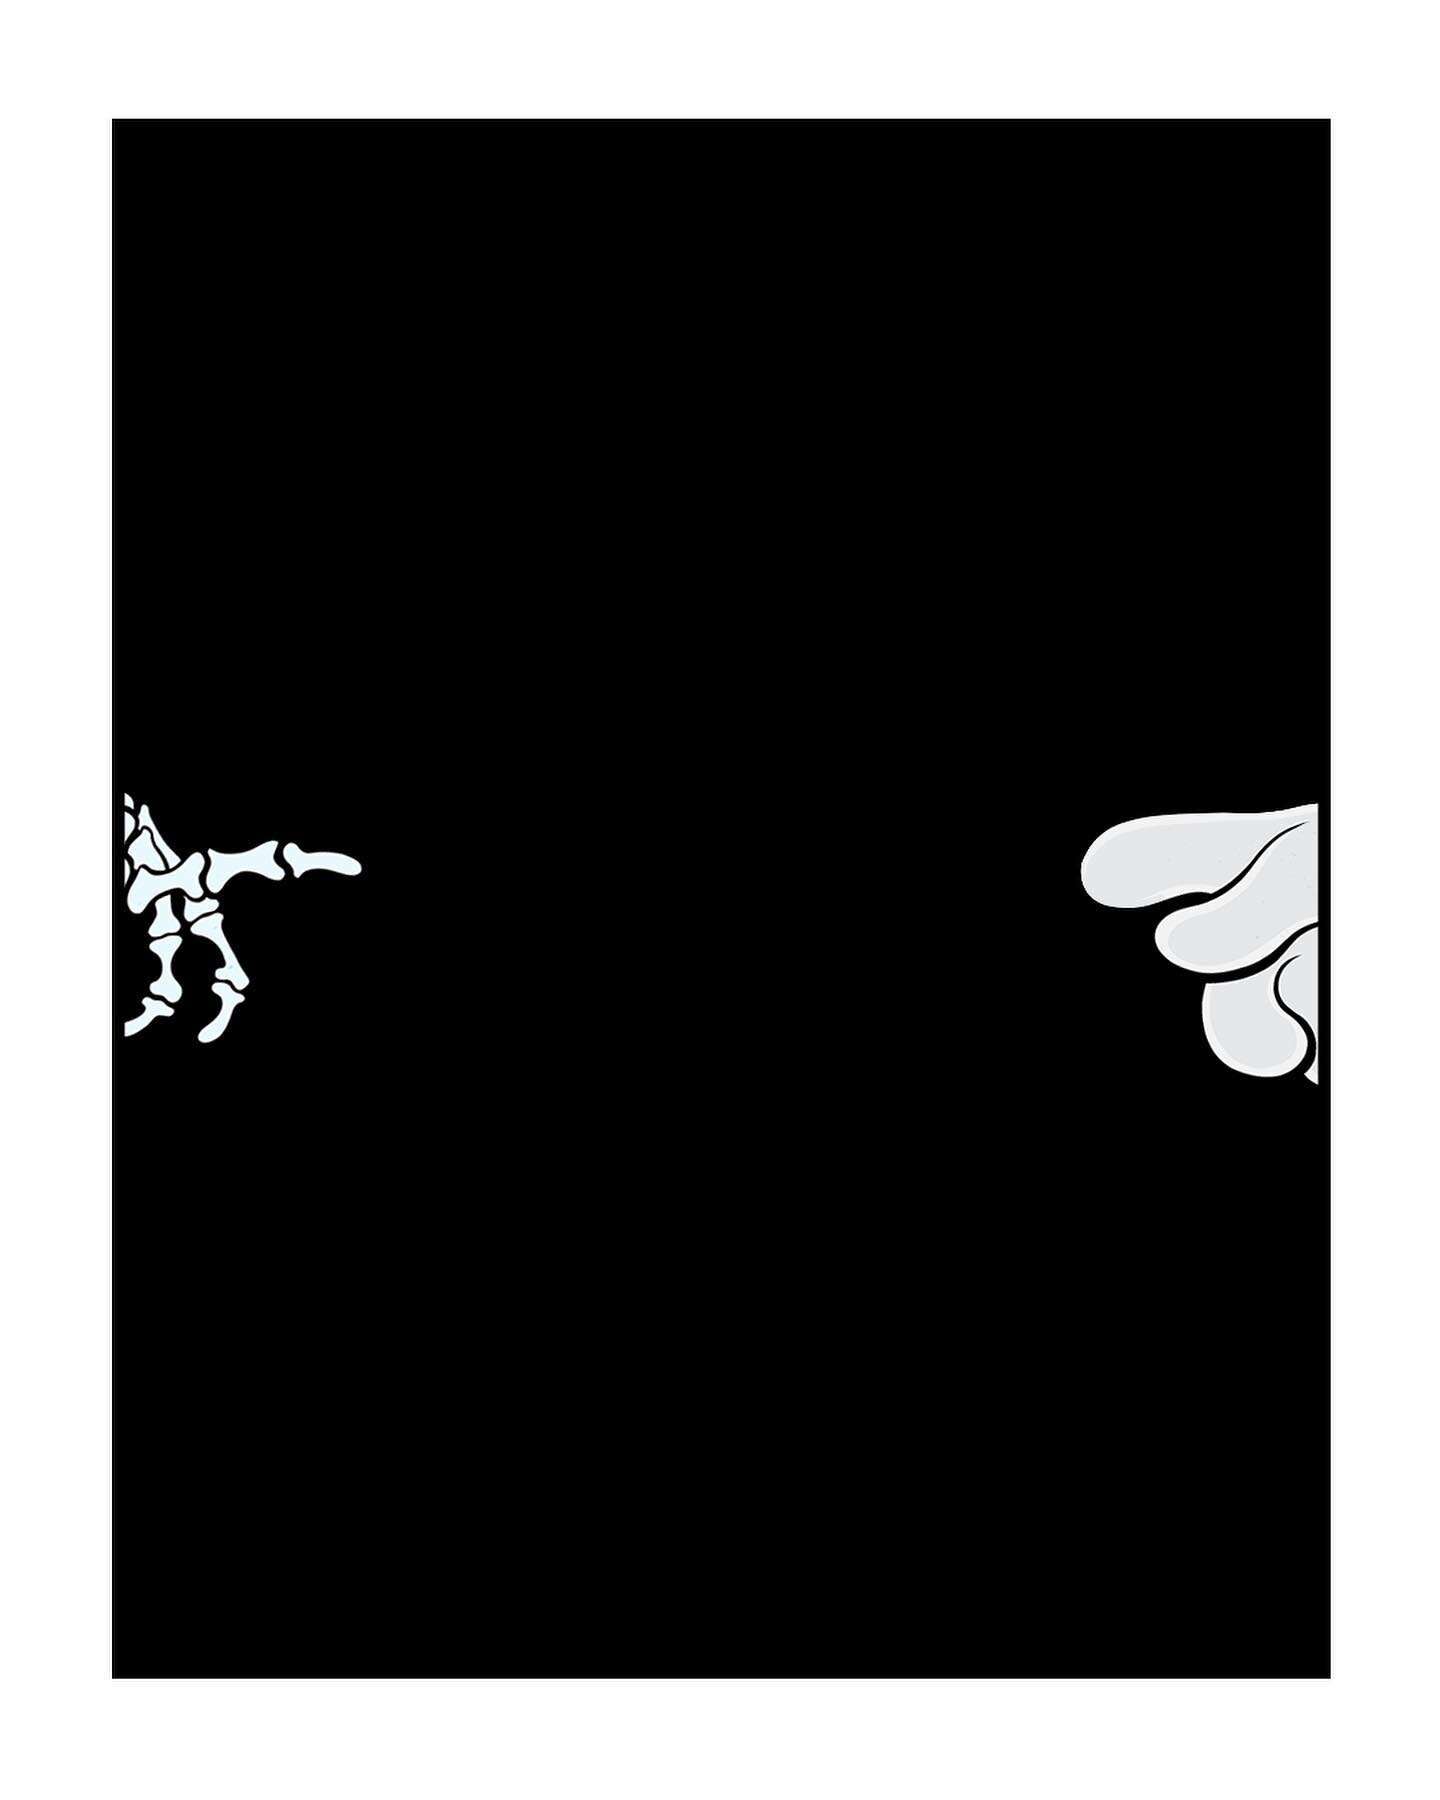 SUICIDAL TEDDY | MEMENTO INFANTIA ☠️🧸...
.
.
.
#suicidalteddy #lobotom #tegneserie #comicstrip #webcomic #kartoon #memento #infantia